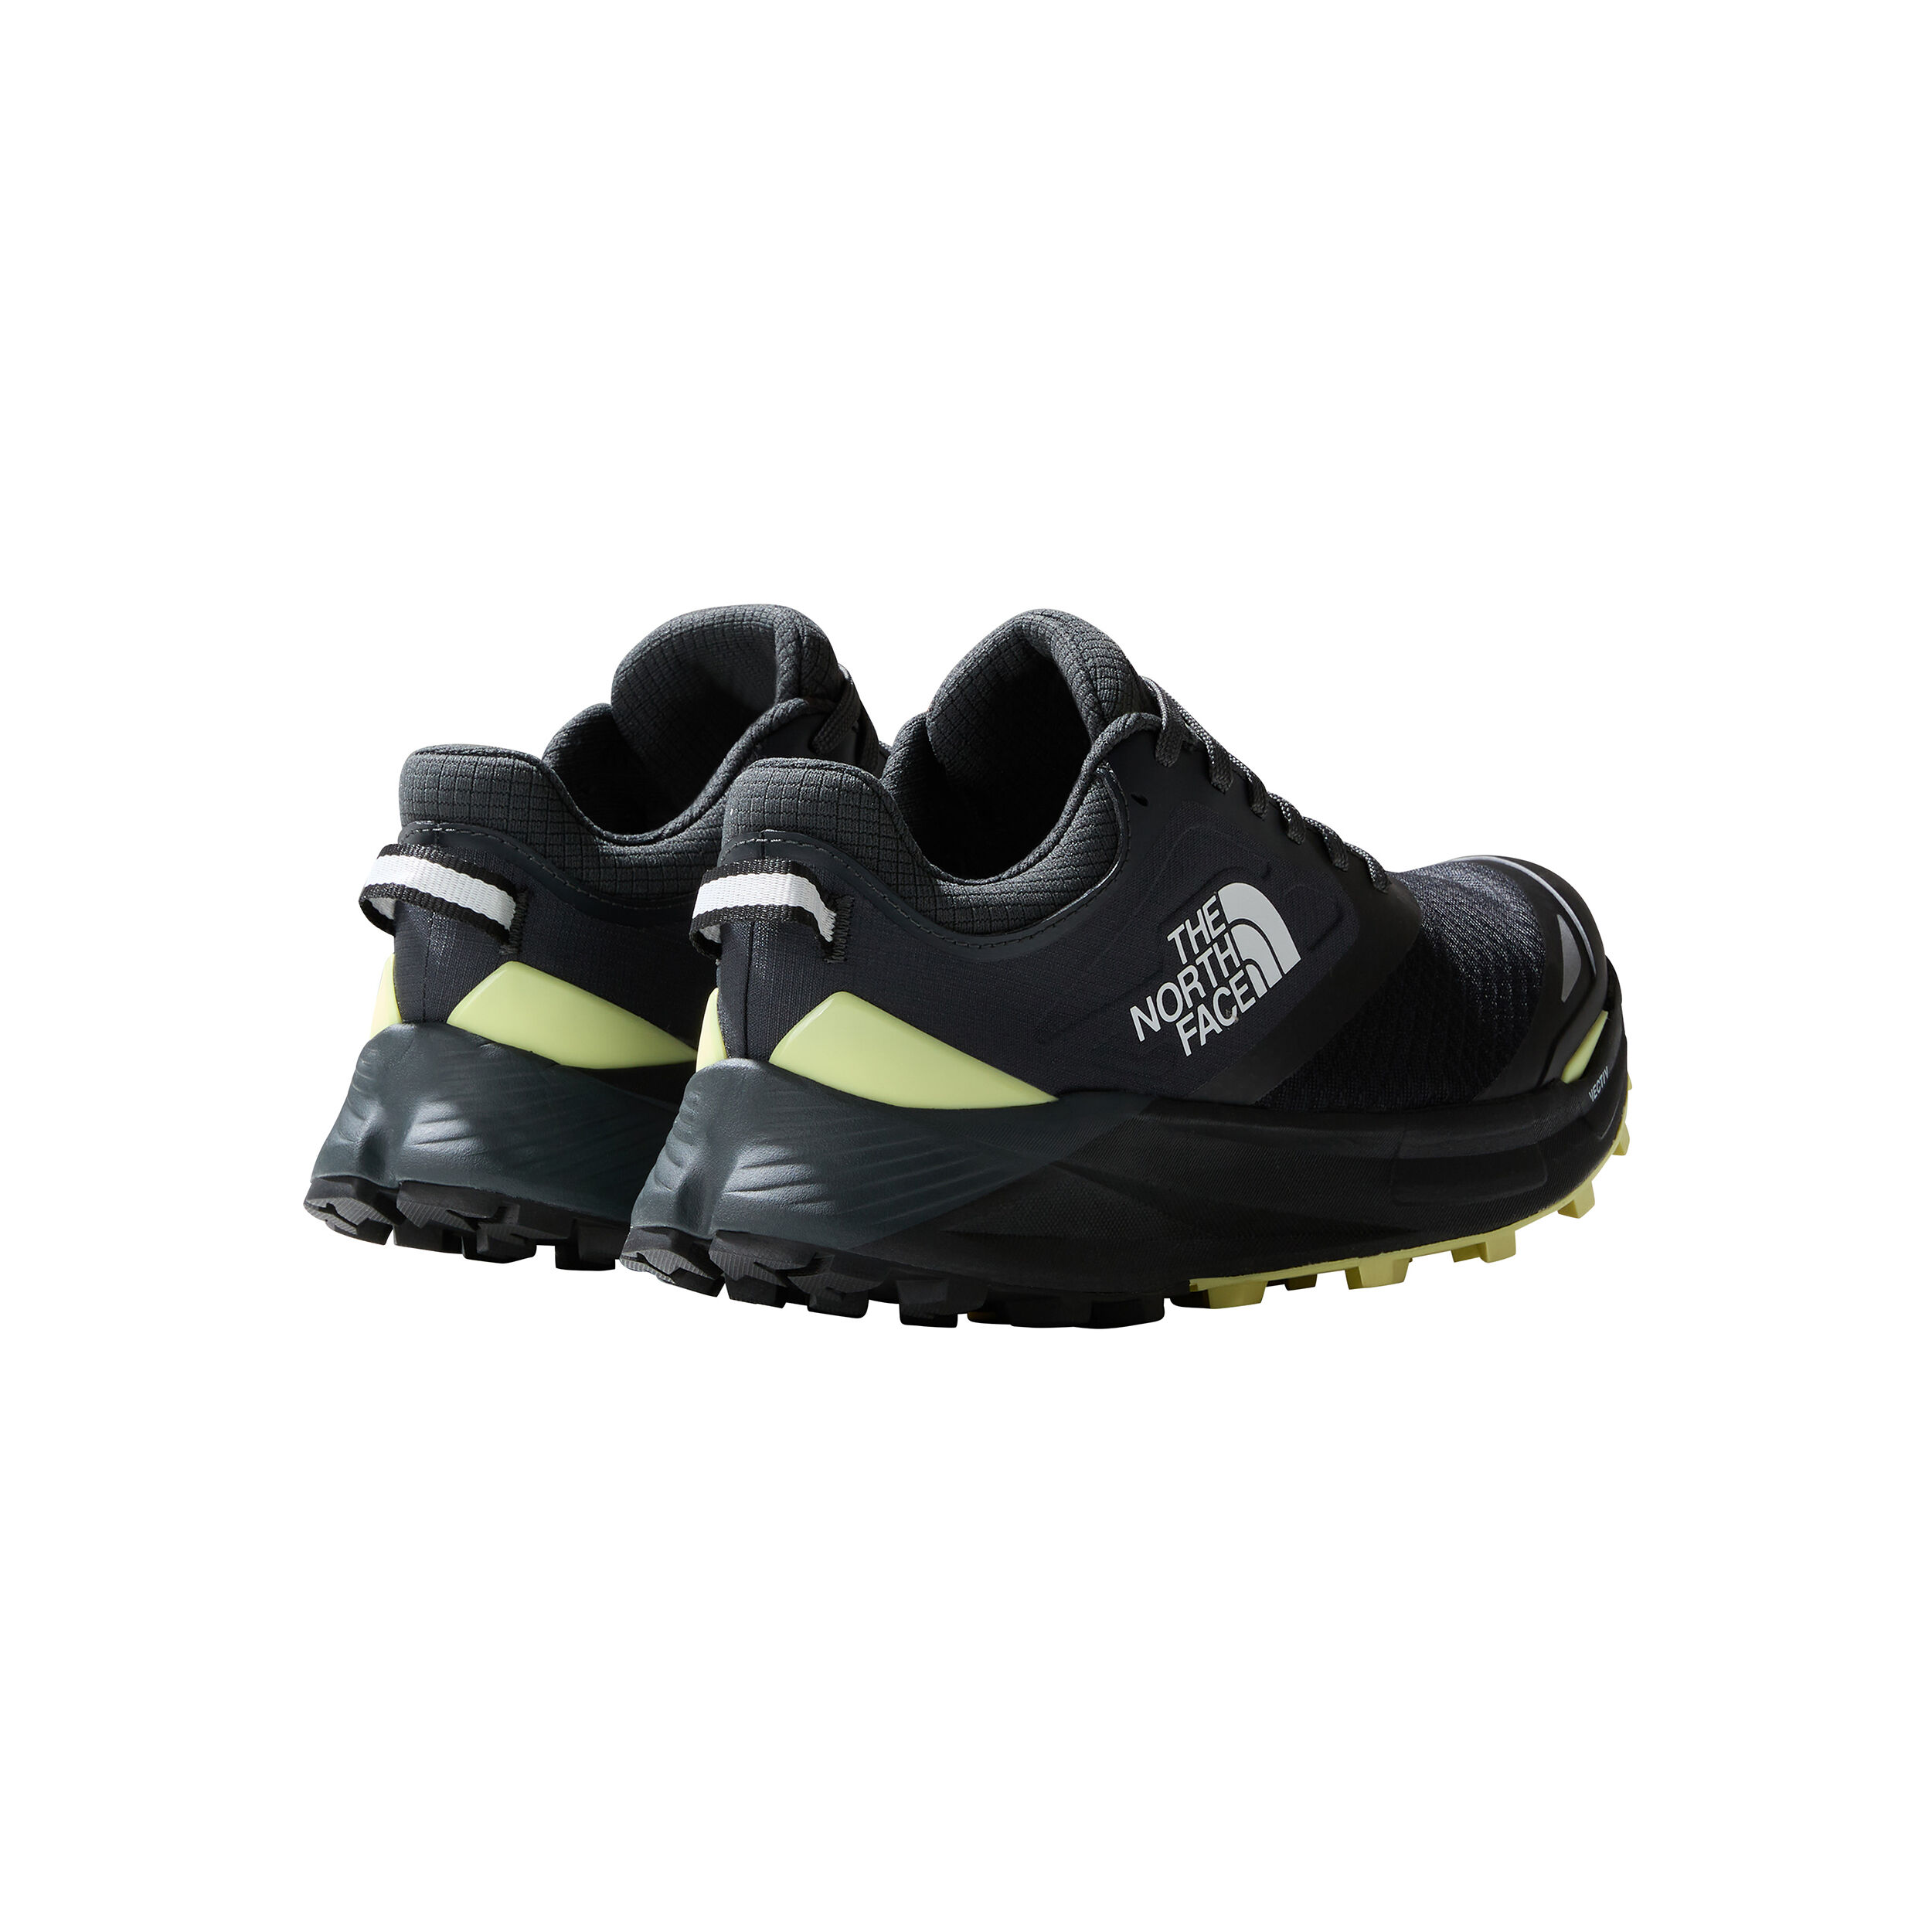 Vectiv Enduris 3 Futurelight Trail Running Shoe Women - Black, Lime